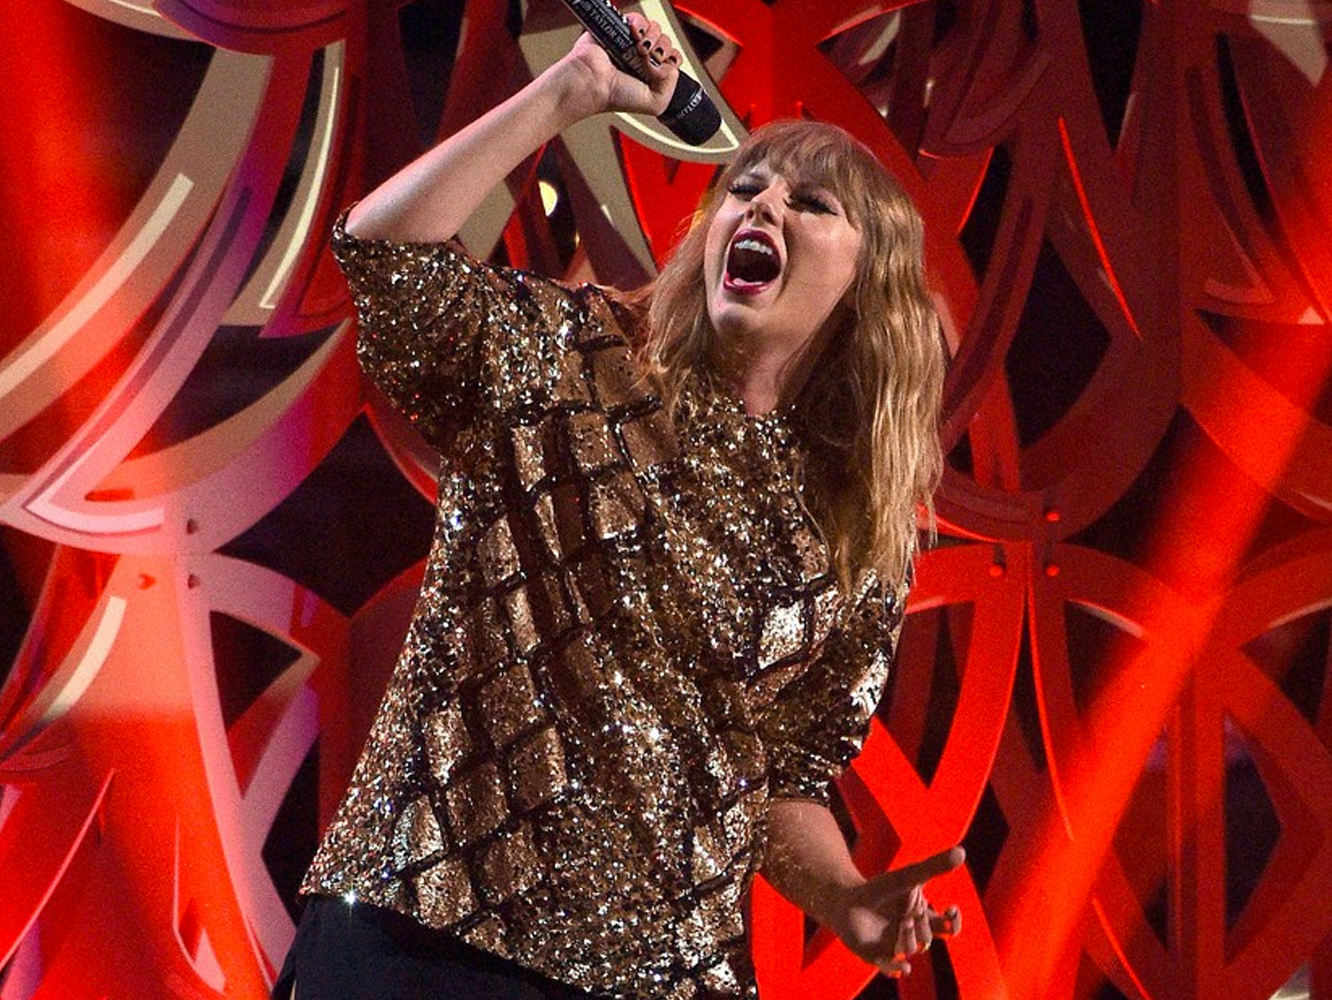  Taylor Swift abandona su guarida y promociona ‘Reputation’ en el Jingle Ball 2017